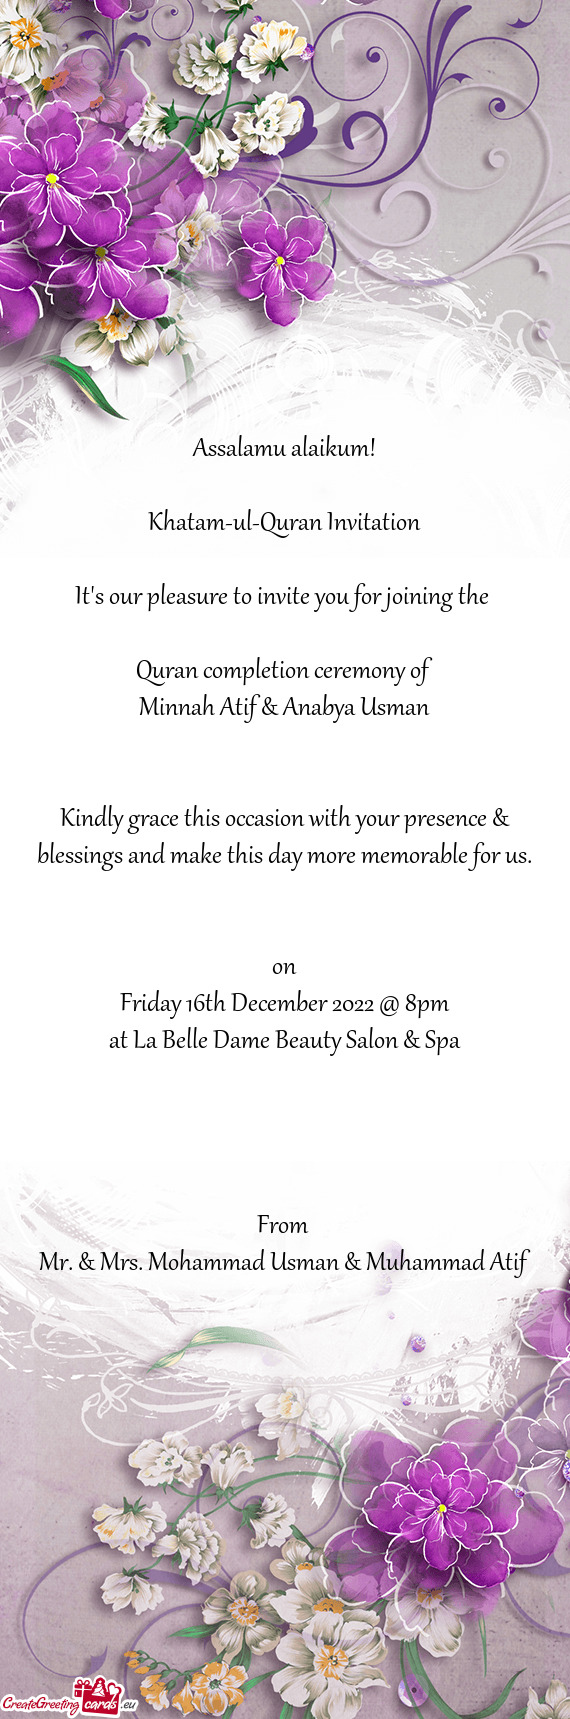 Khatam-ul-Quran Invitation